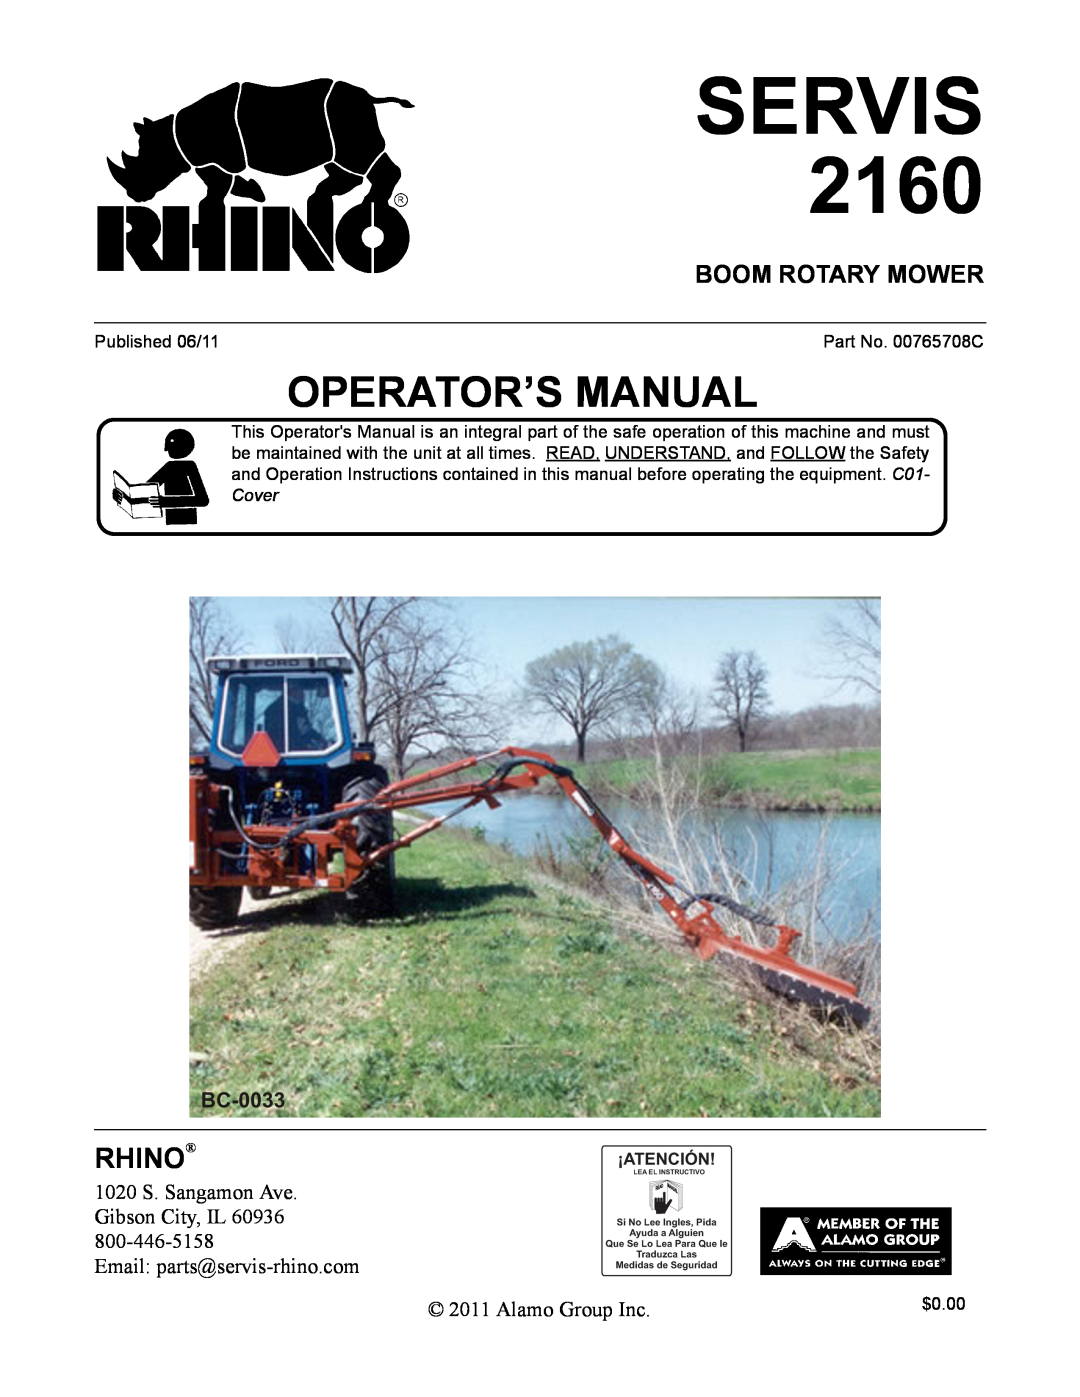 Servis-Rhino 2160 manual Servis, Rhino, Boom Rotary Mower, Operator’S Manual 